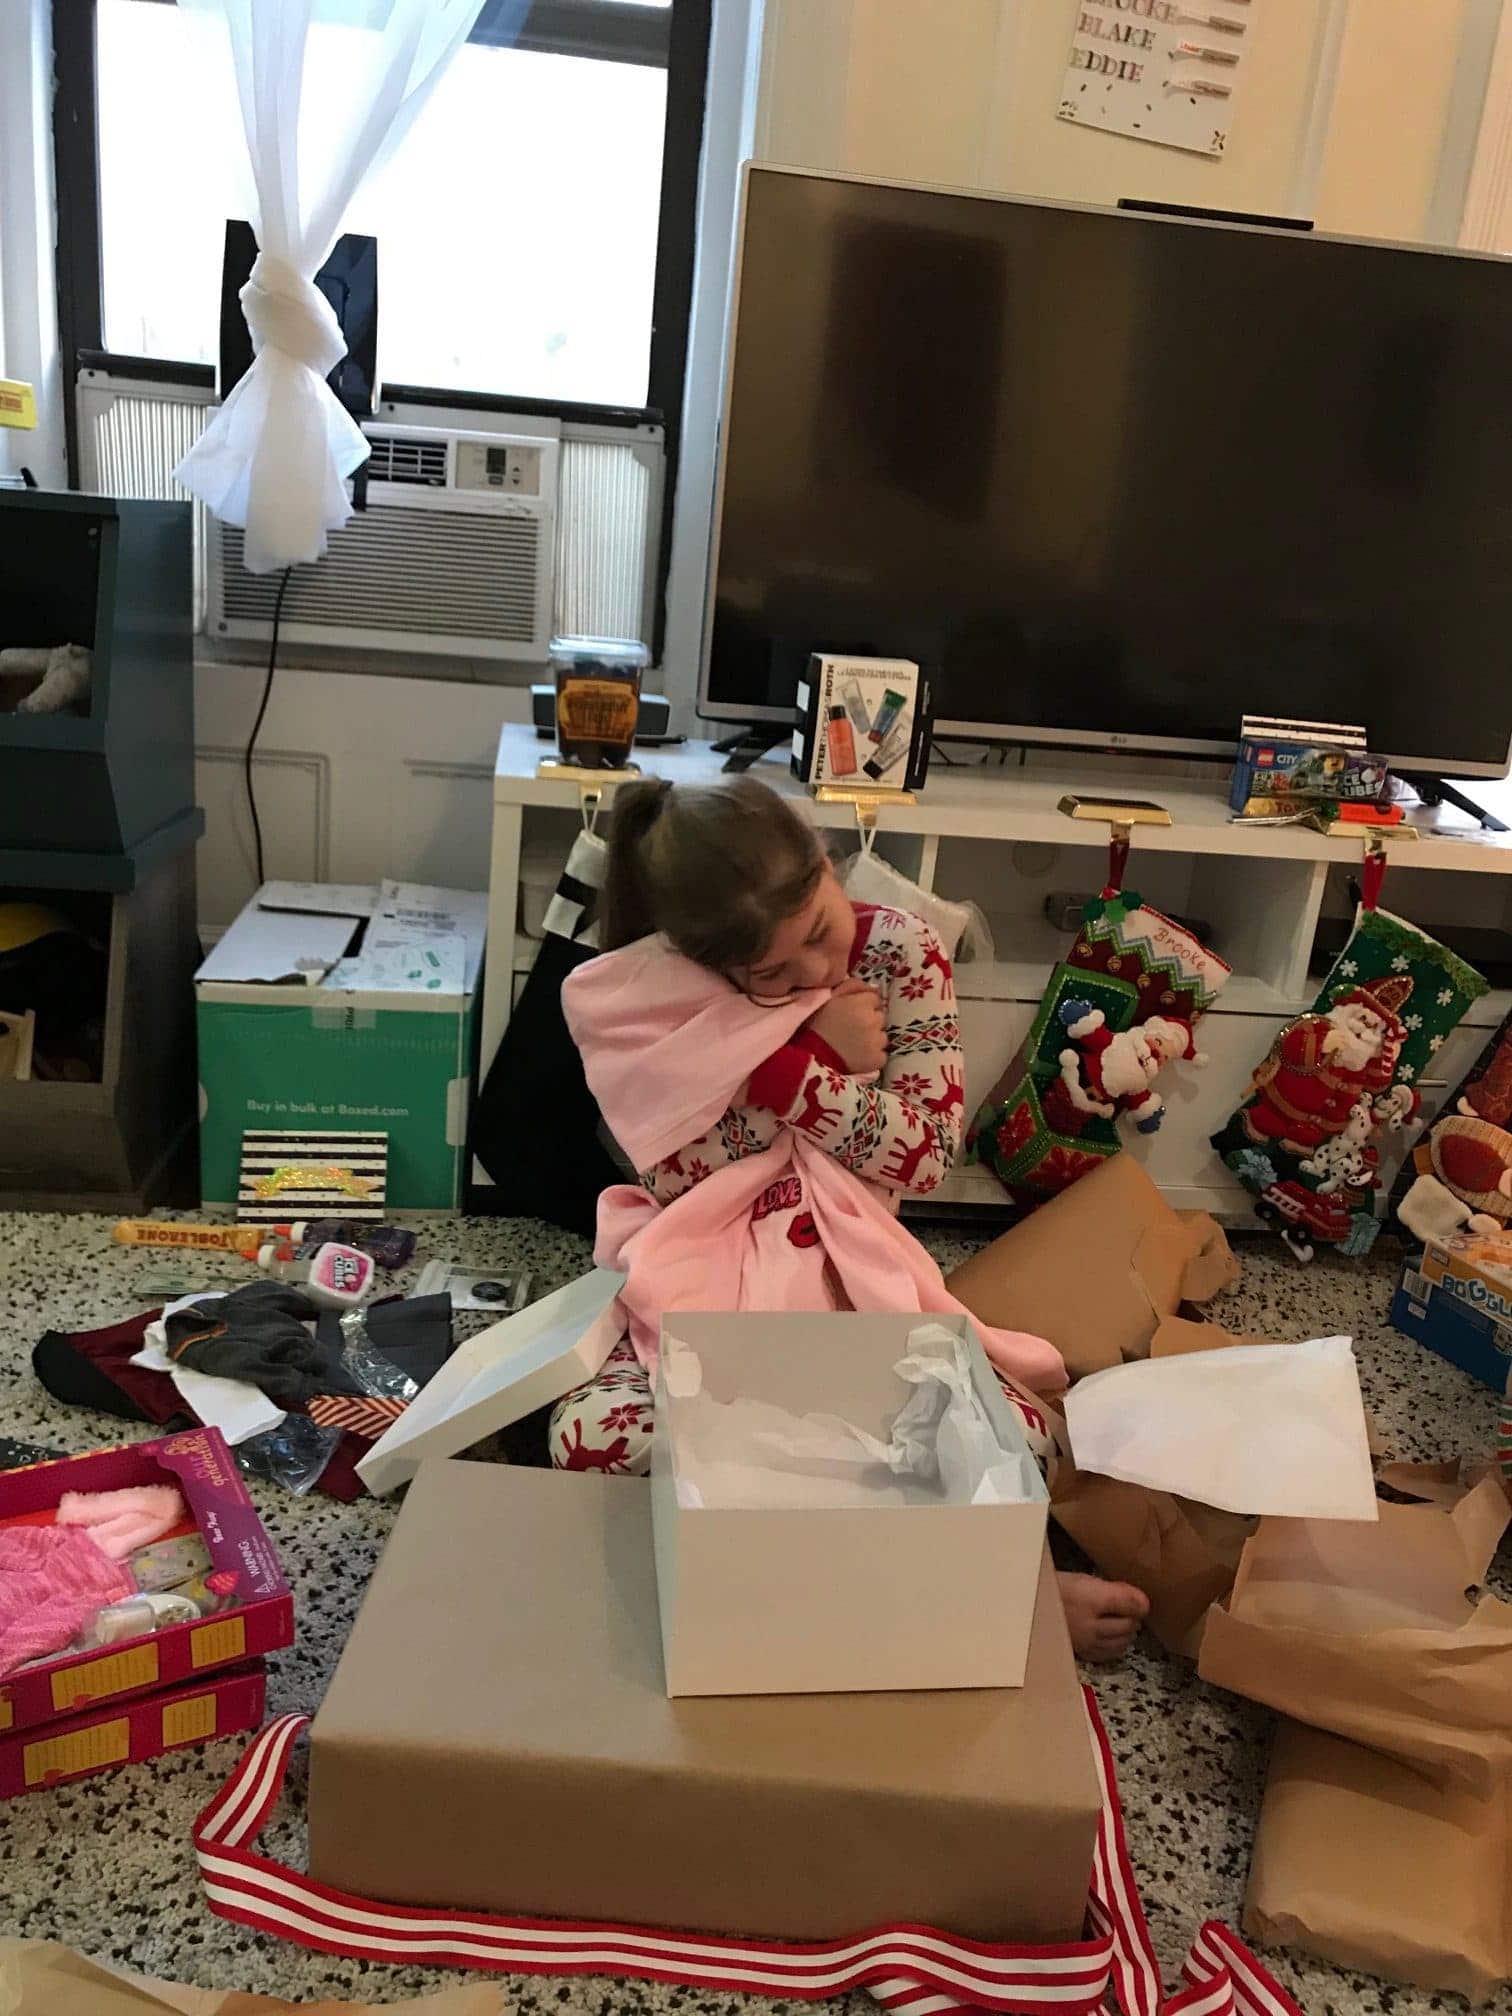 Kids opening presents